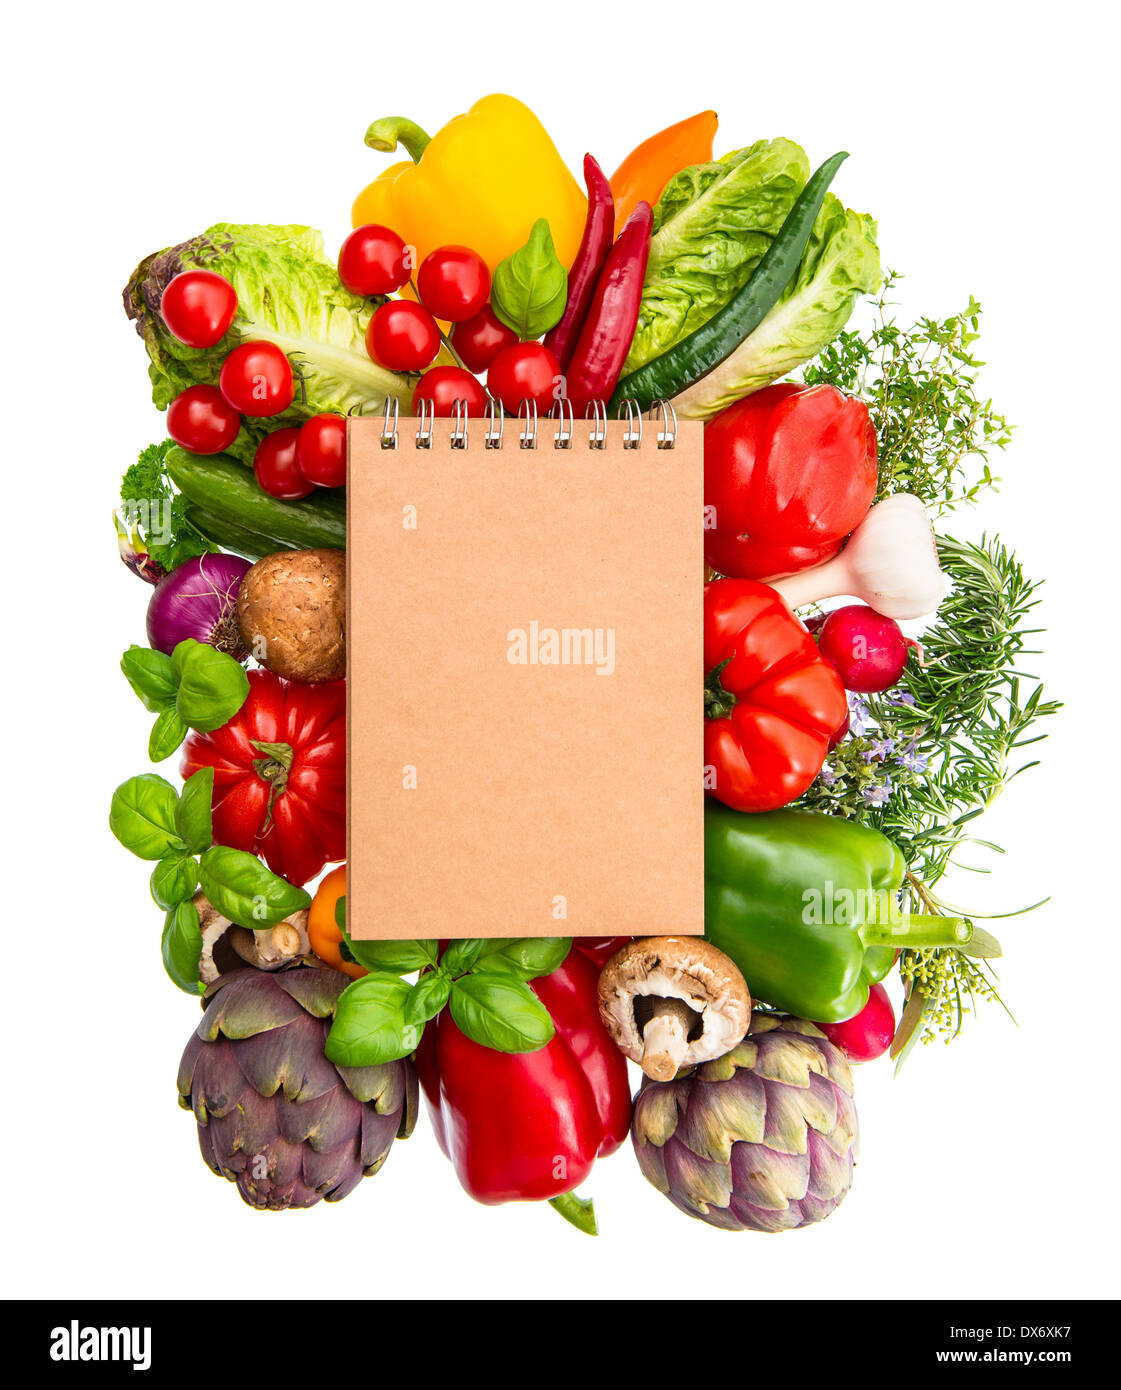 Libro de recetas de cocina con verduras y hierbas frescas orgánicas aislado sobre fondo blanco. alimentos crudos. Foto de stock